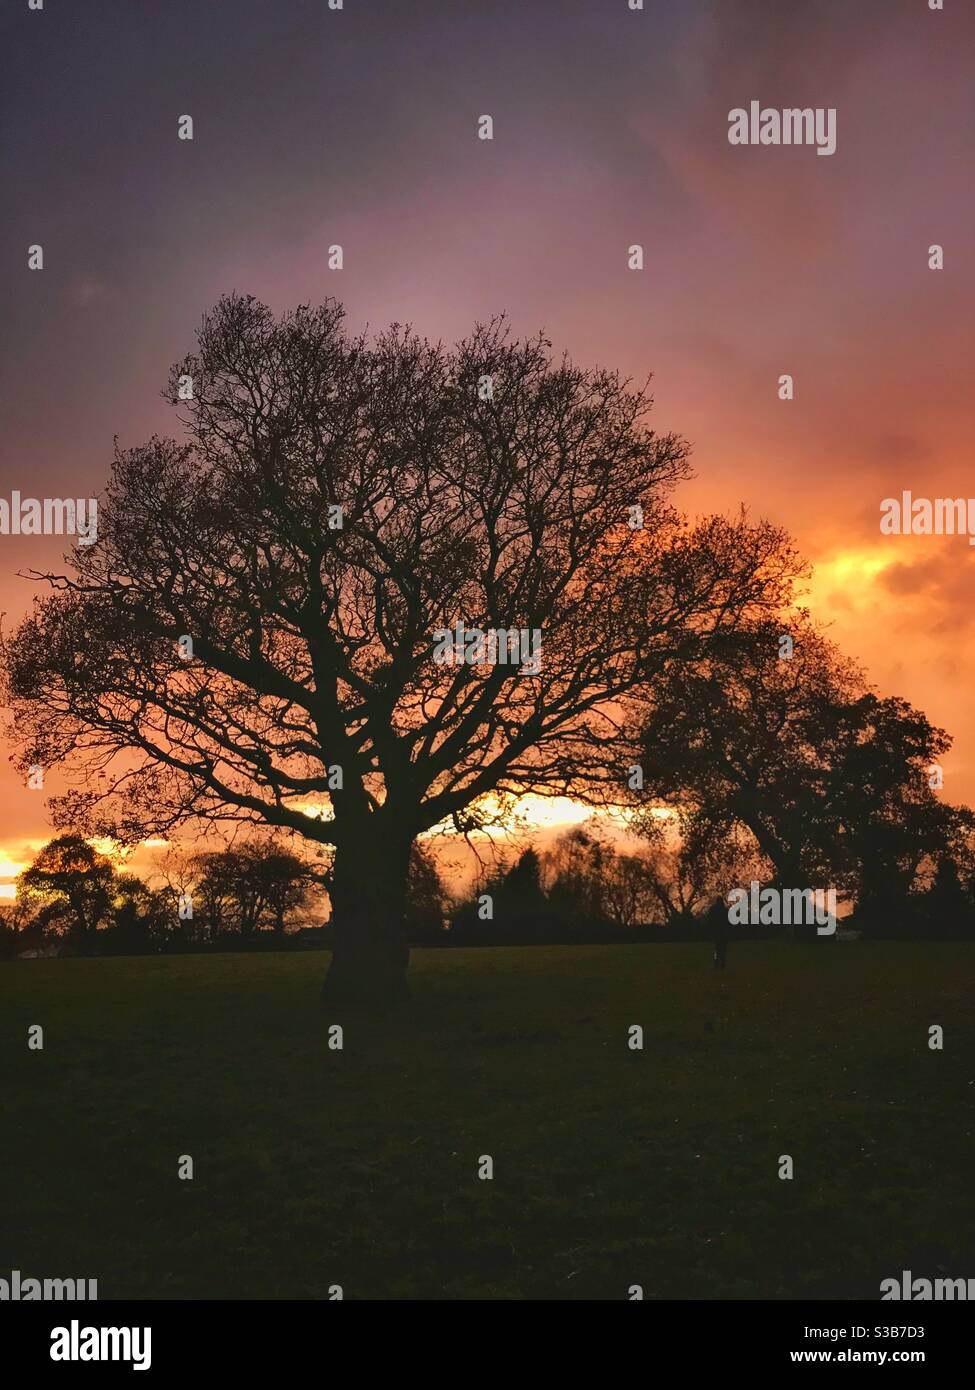 Autumn sunset with tree silhouettes Stock Photo